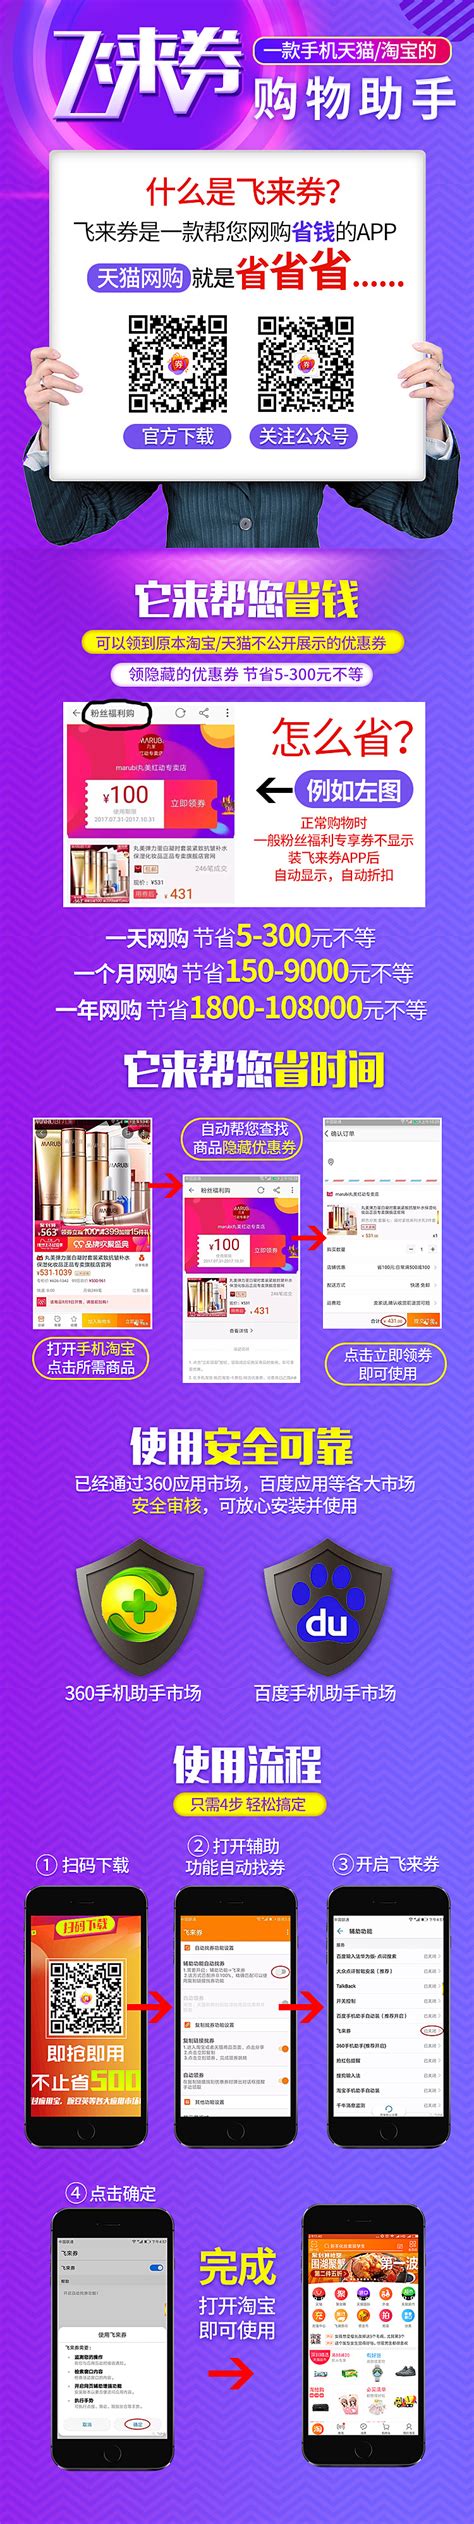 App广告截图集|平面|宣传品|christalhuang - 原创作品 - 站酷 (ZCOOL)